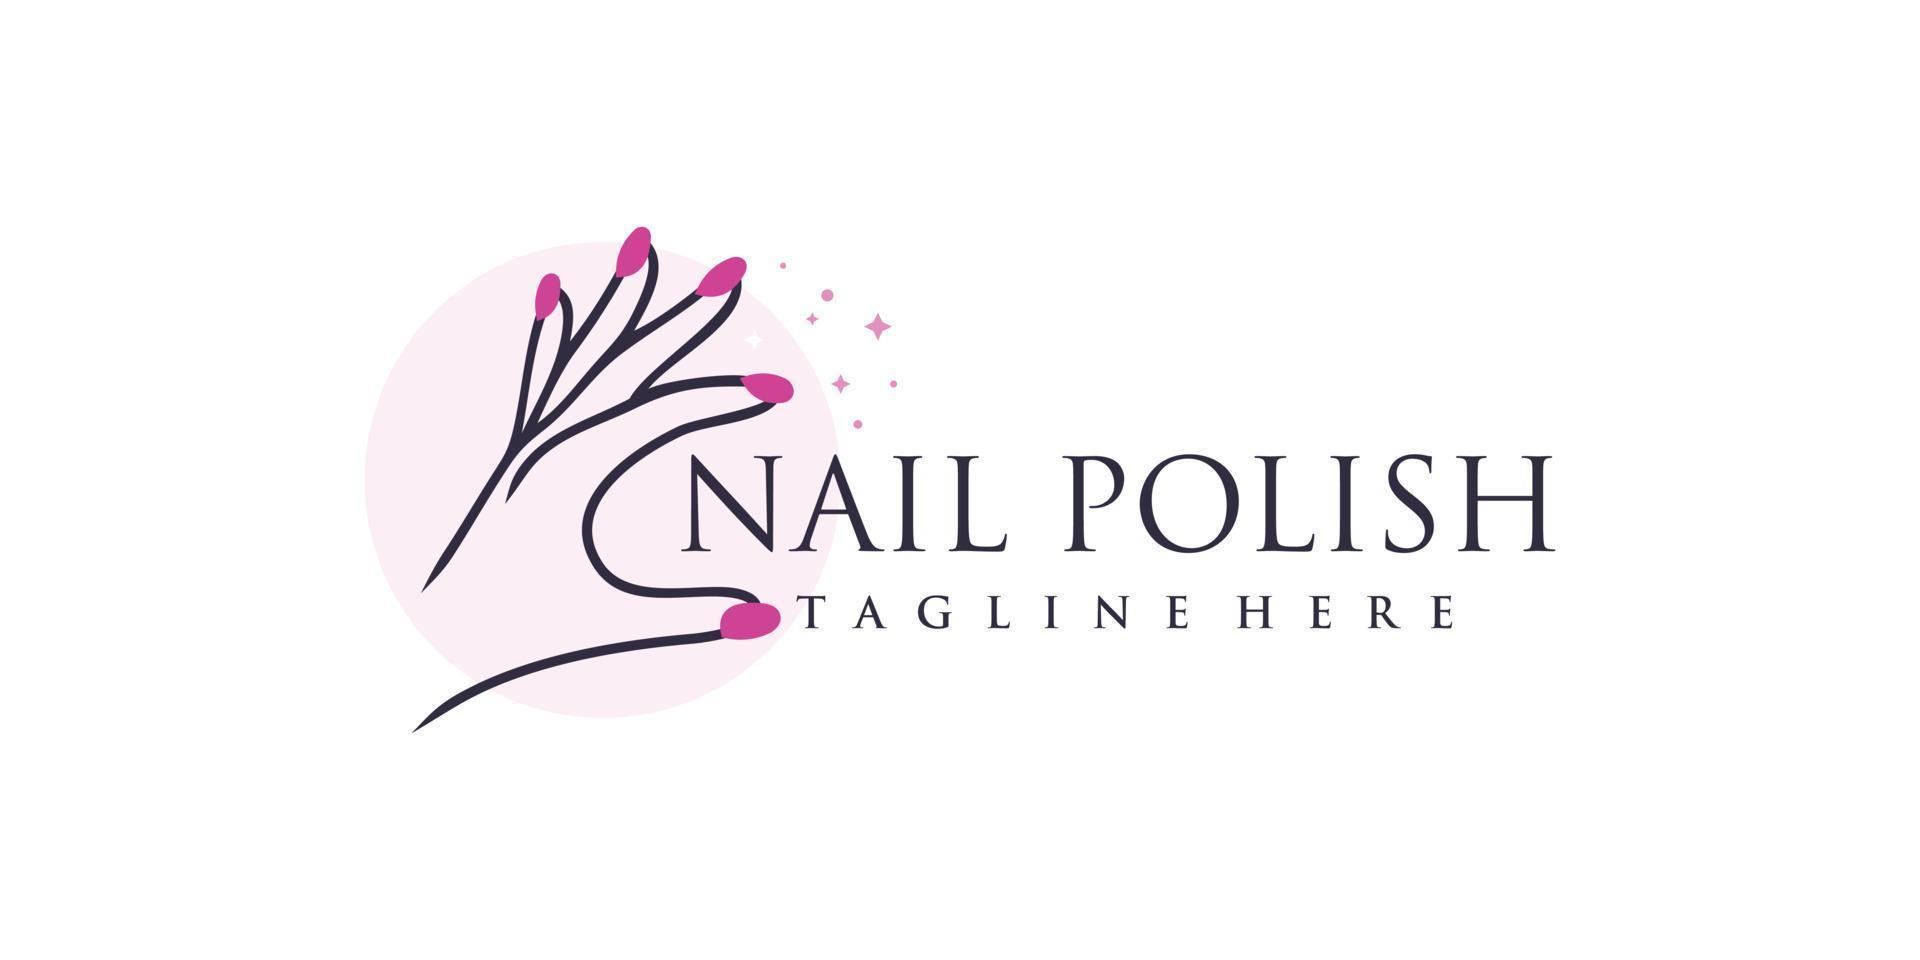 Nail polish vector icon for woman with modern creative logo design Premium Vector